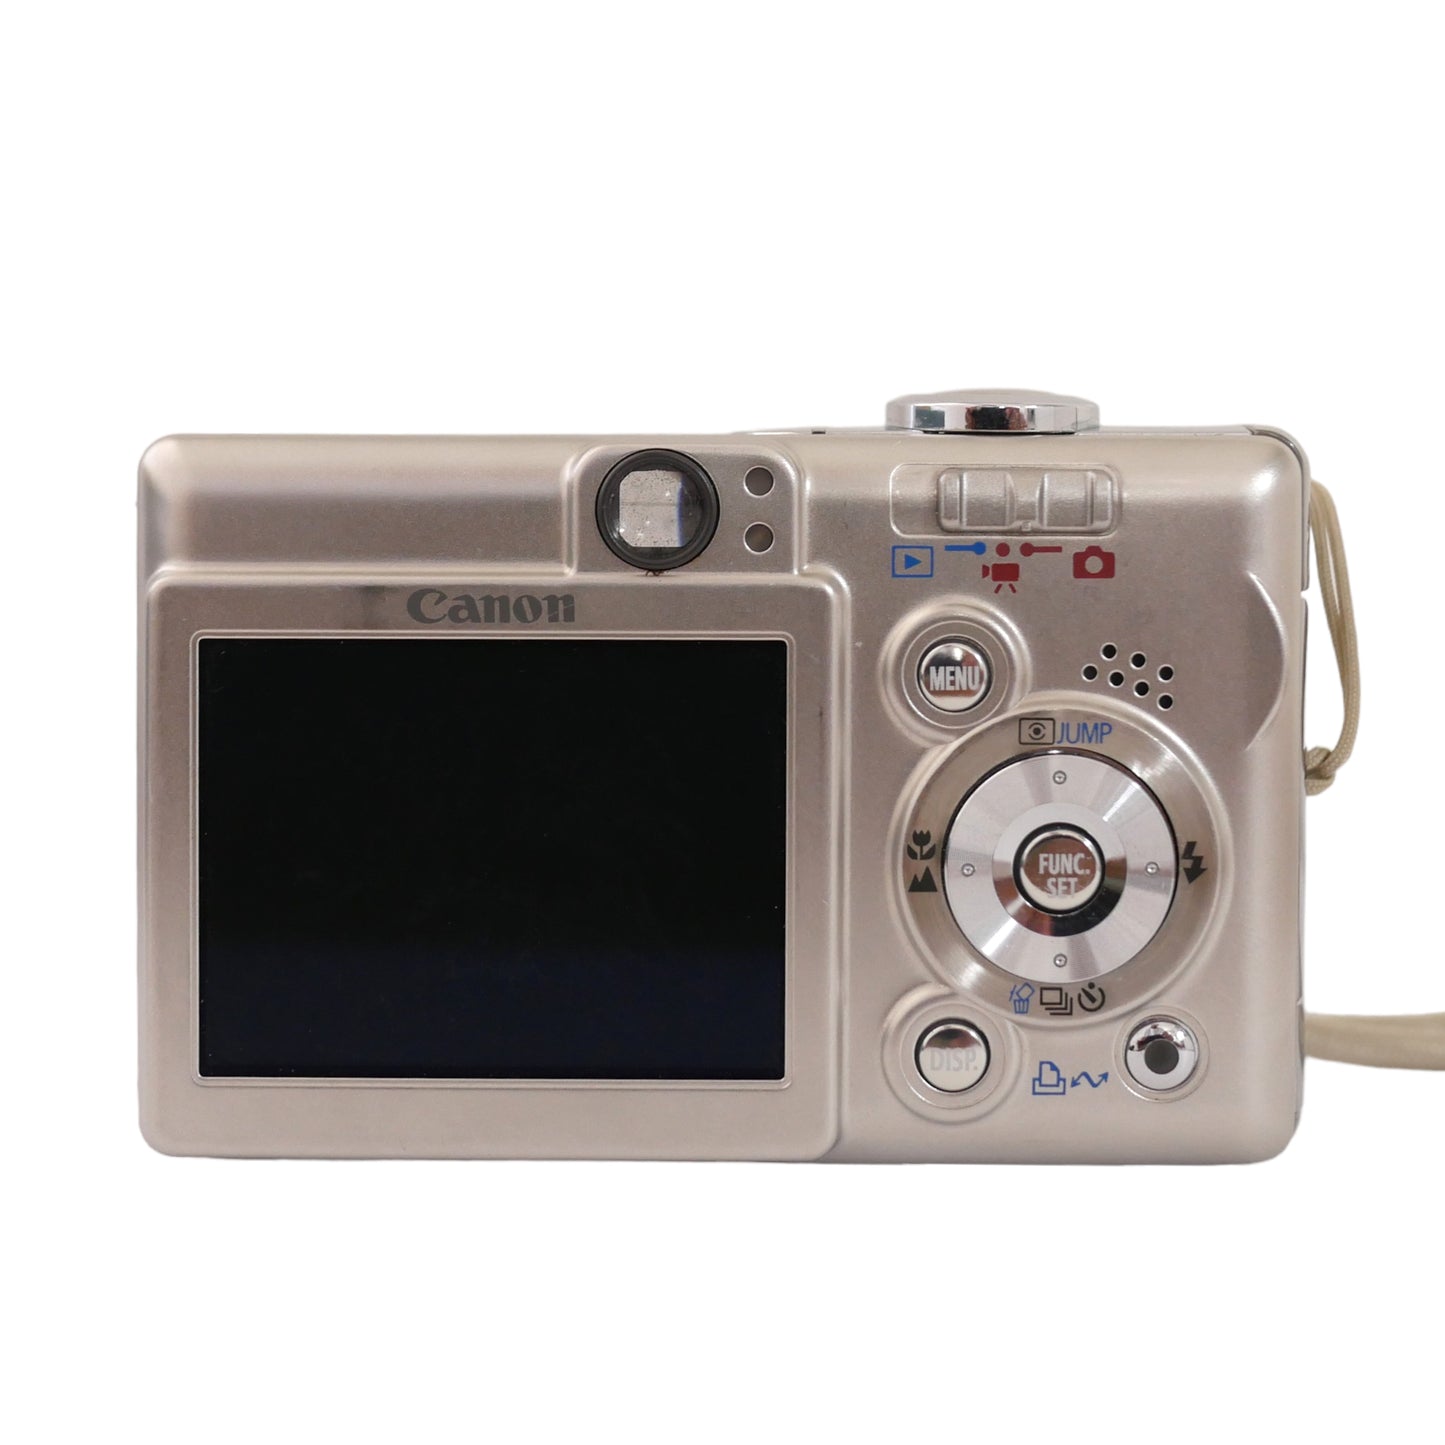 Canon Powershot SD400 5.0 Megapixel Digital Camera